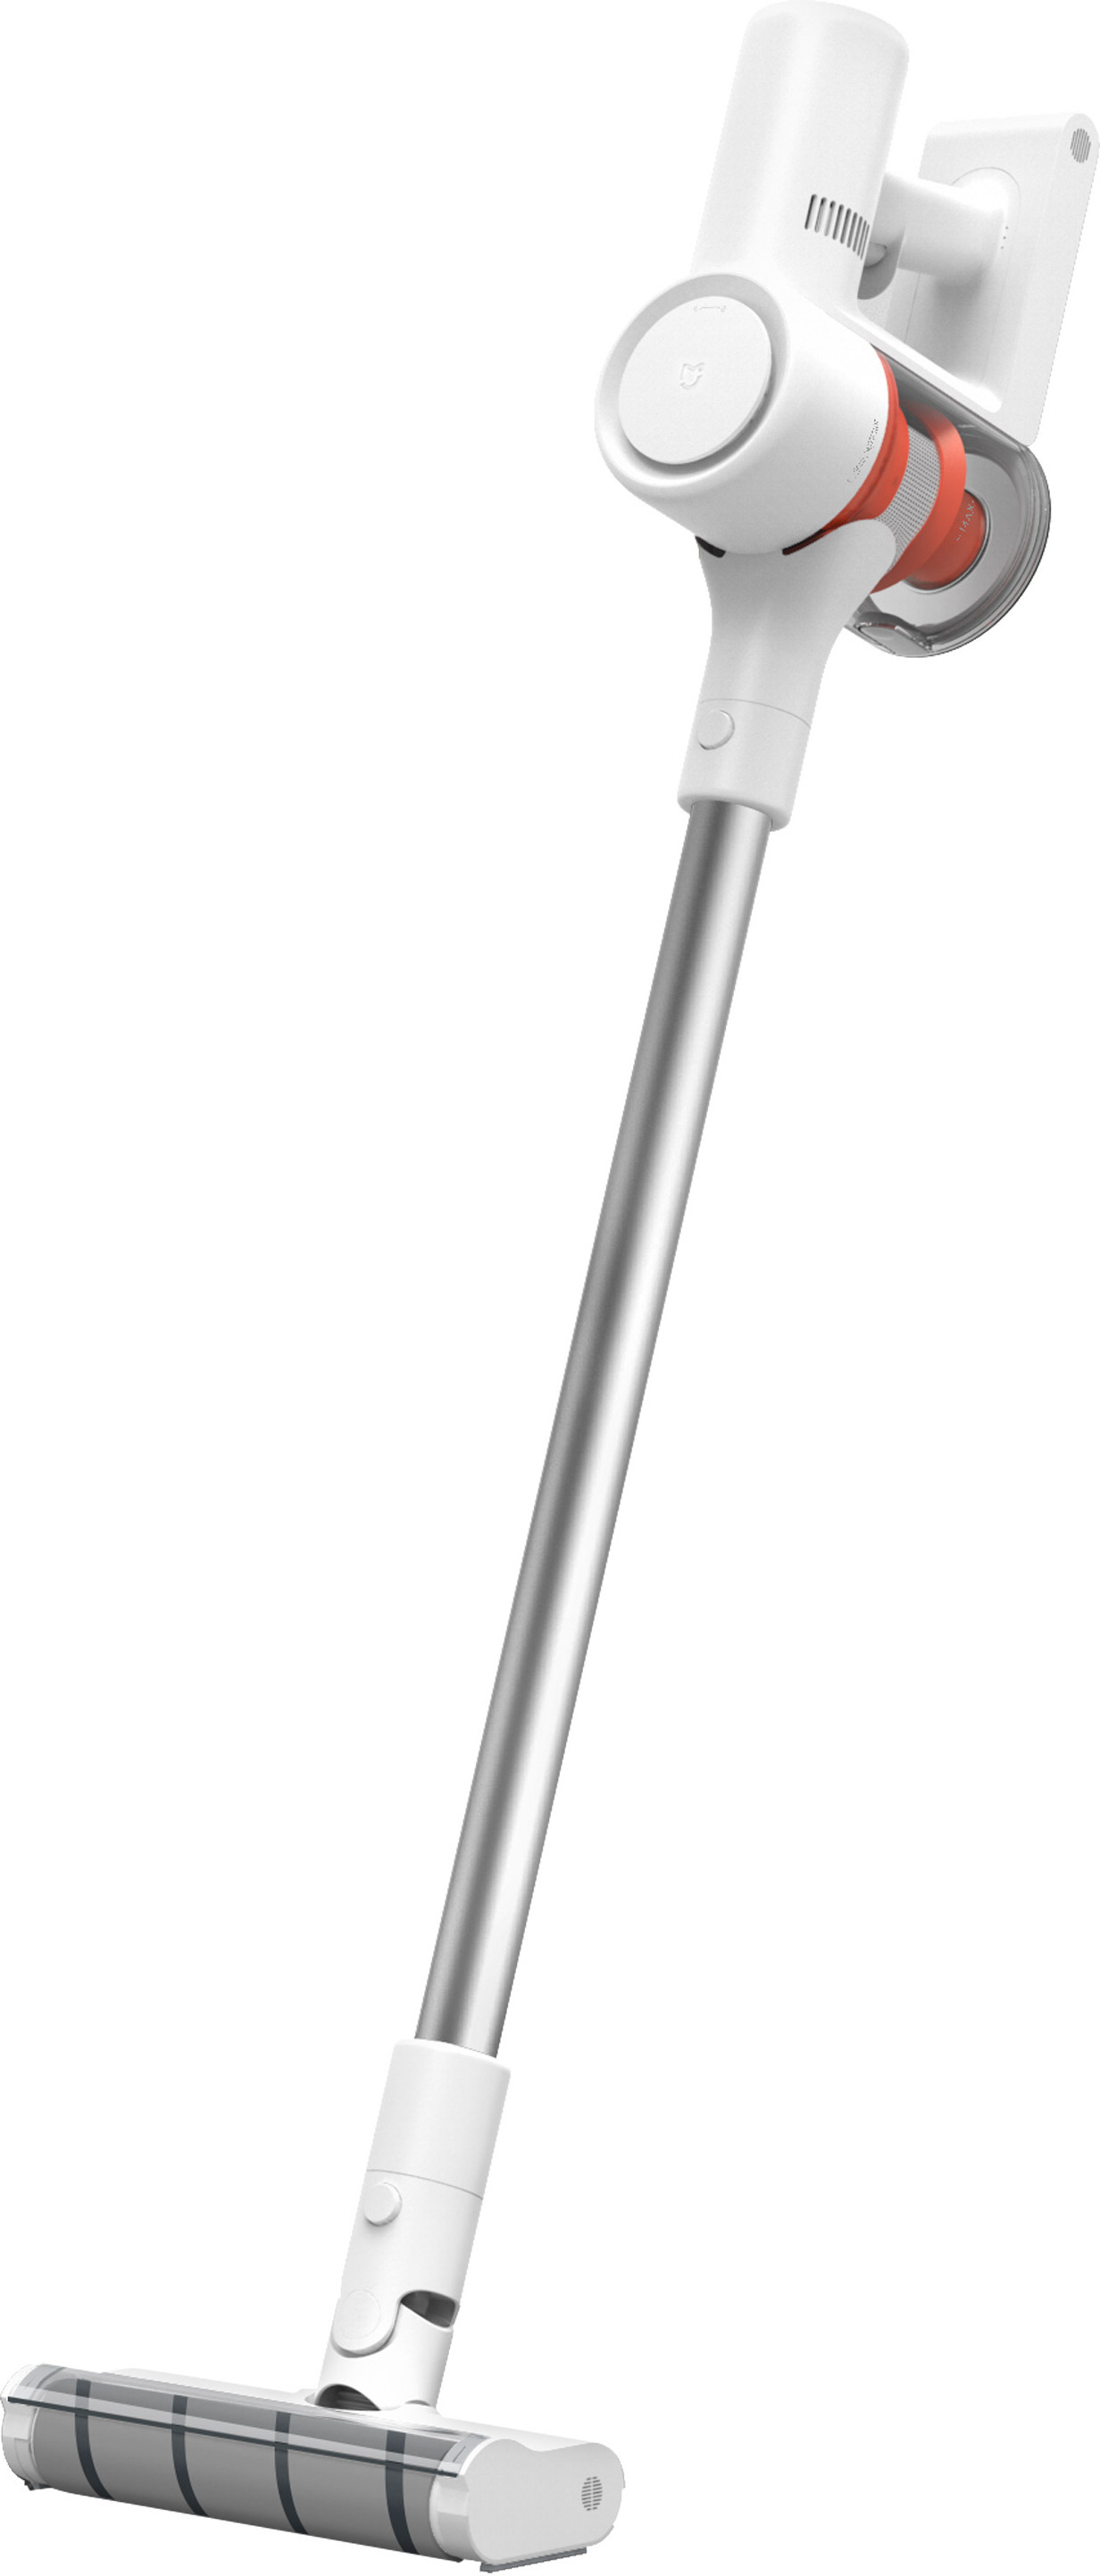 Характеристика пылесоса вертикального беспроводного. Беспроводной пылесос Xiaomi Mijia 1c. Пылесос Xiaomi mi Handheld Vacuum. Пылесос Xiaomi Mijia scwxcq02zhm. Вертикальный пылесос Xiaomi mi Handheld Vacuum Cleaner.